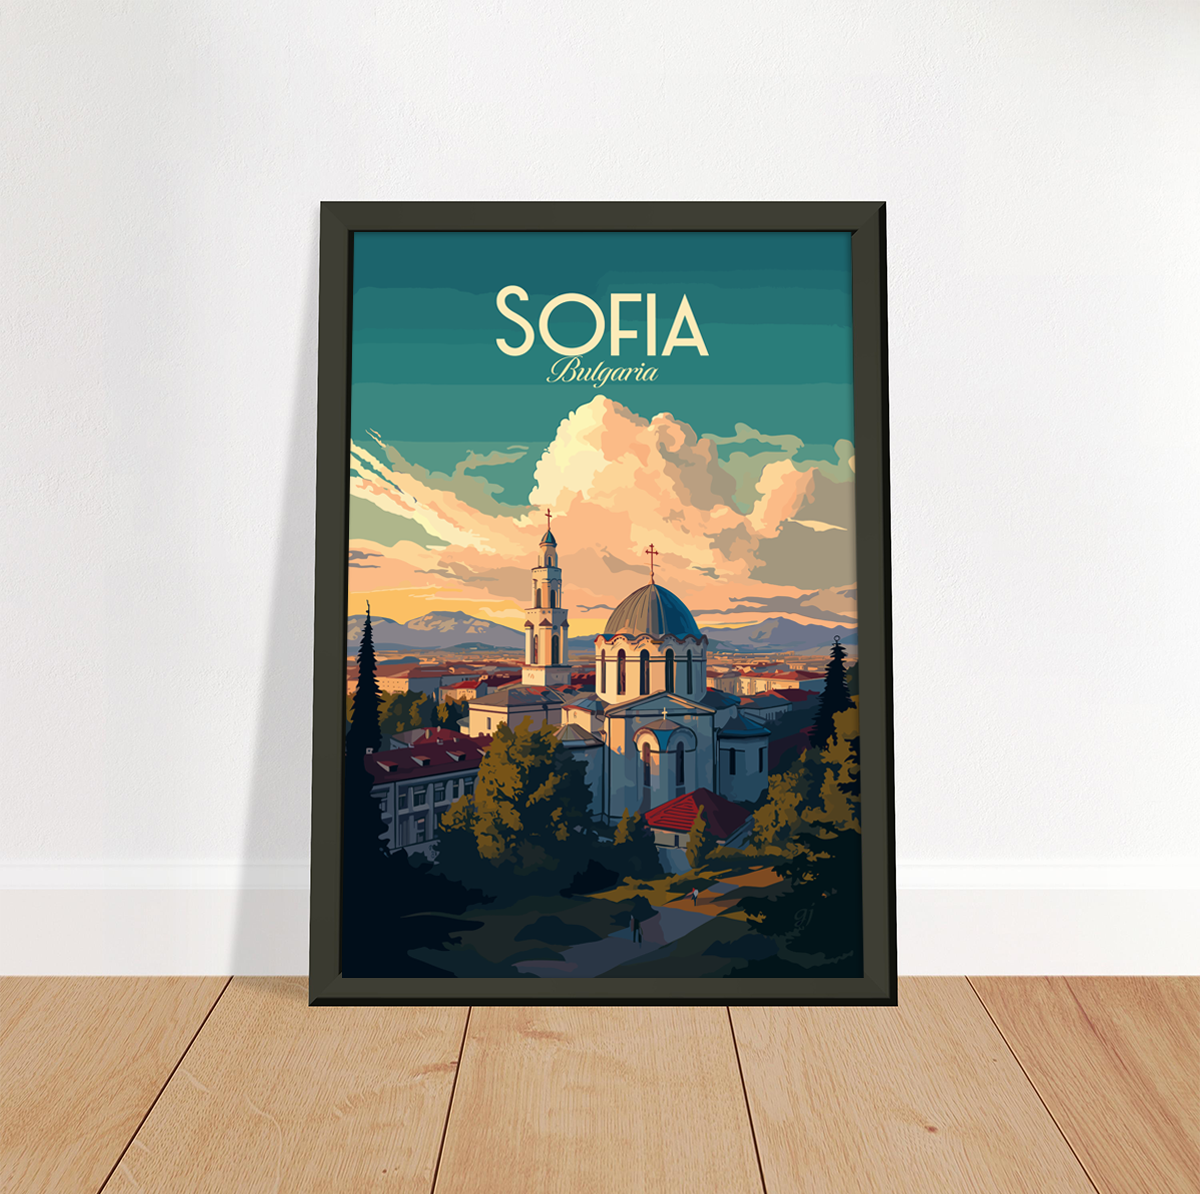 Sofia poster by bon voyage design